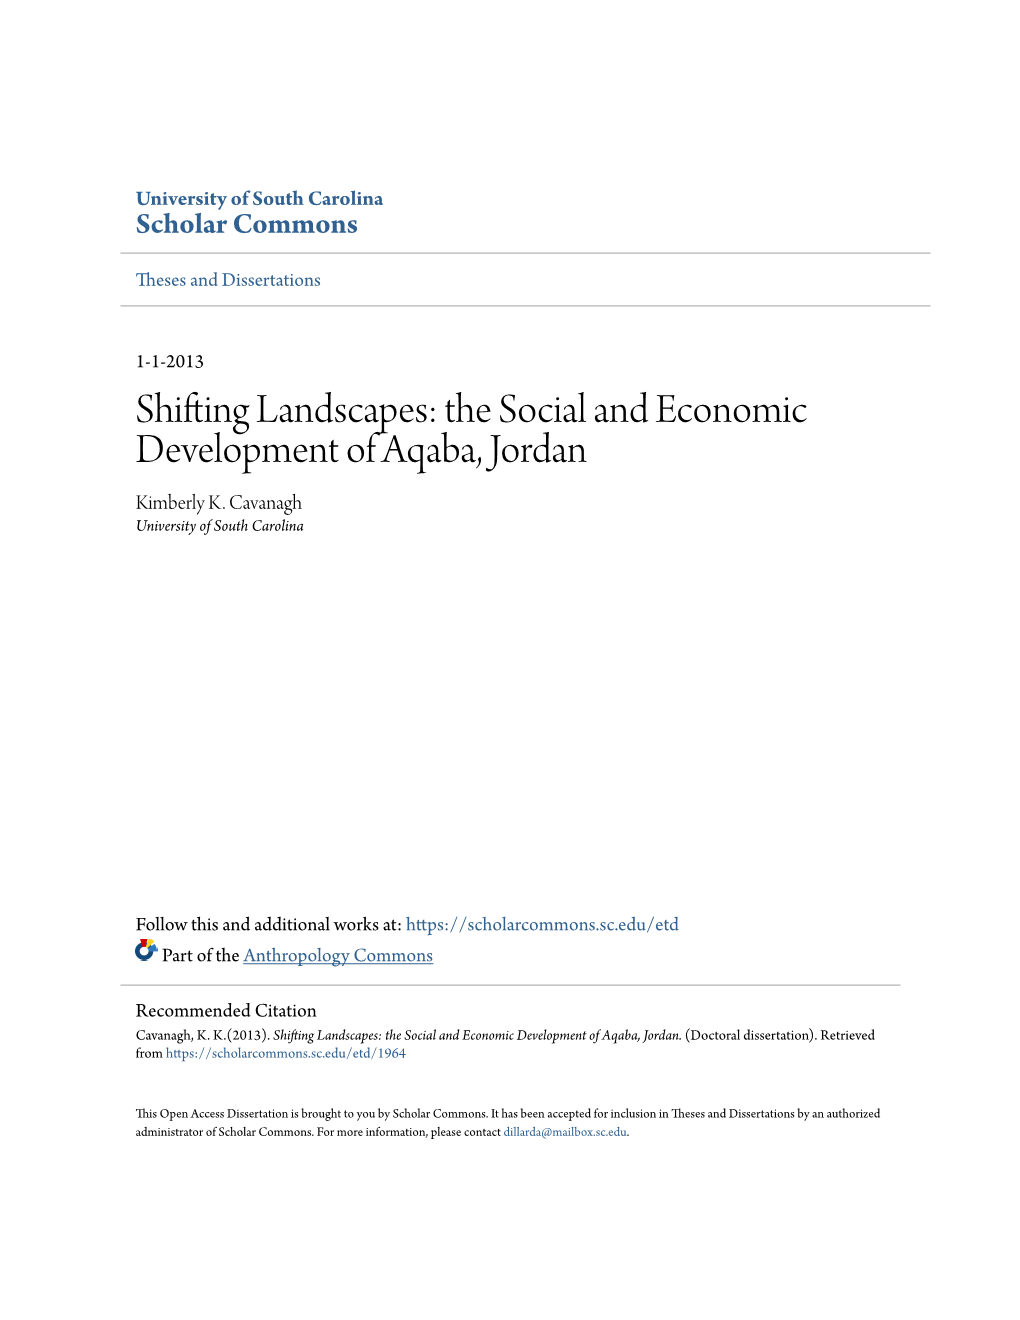 The Social and Economic Development of Aqaba, Jordan Kimberly K